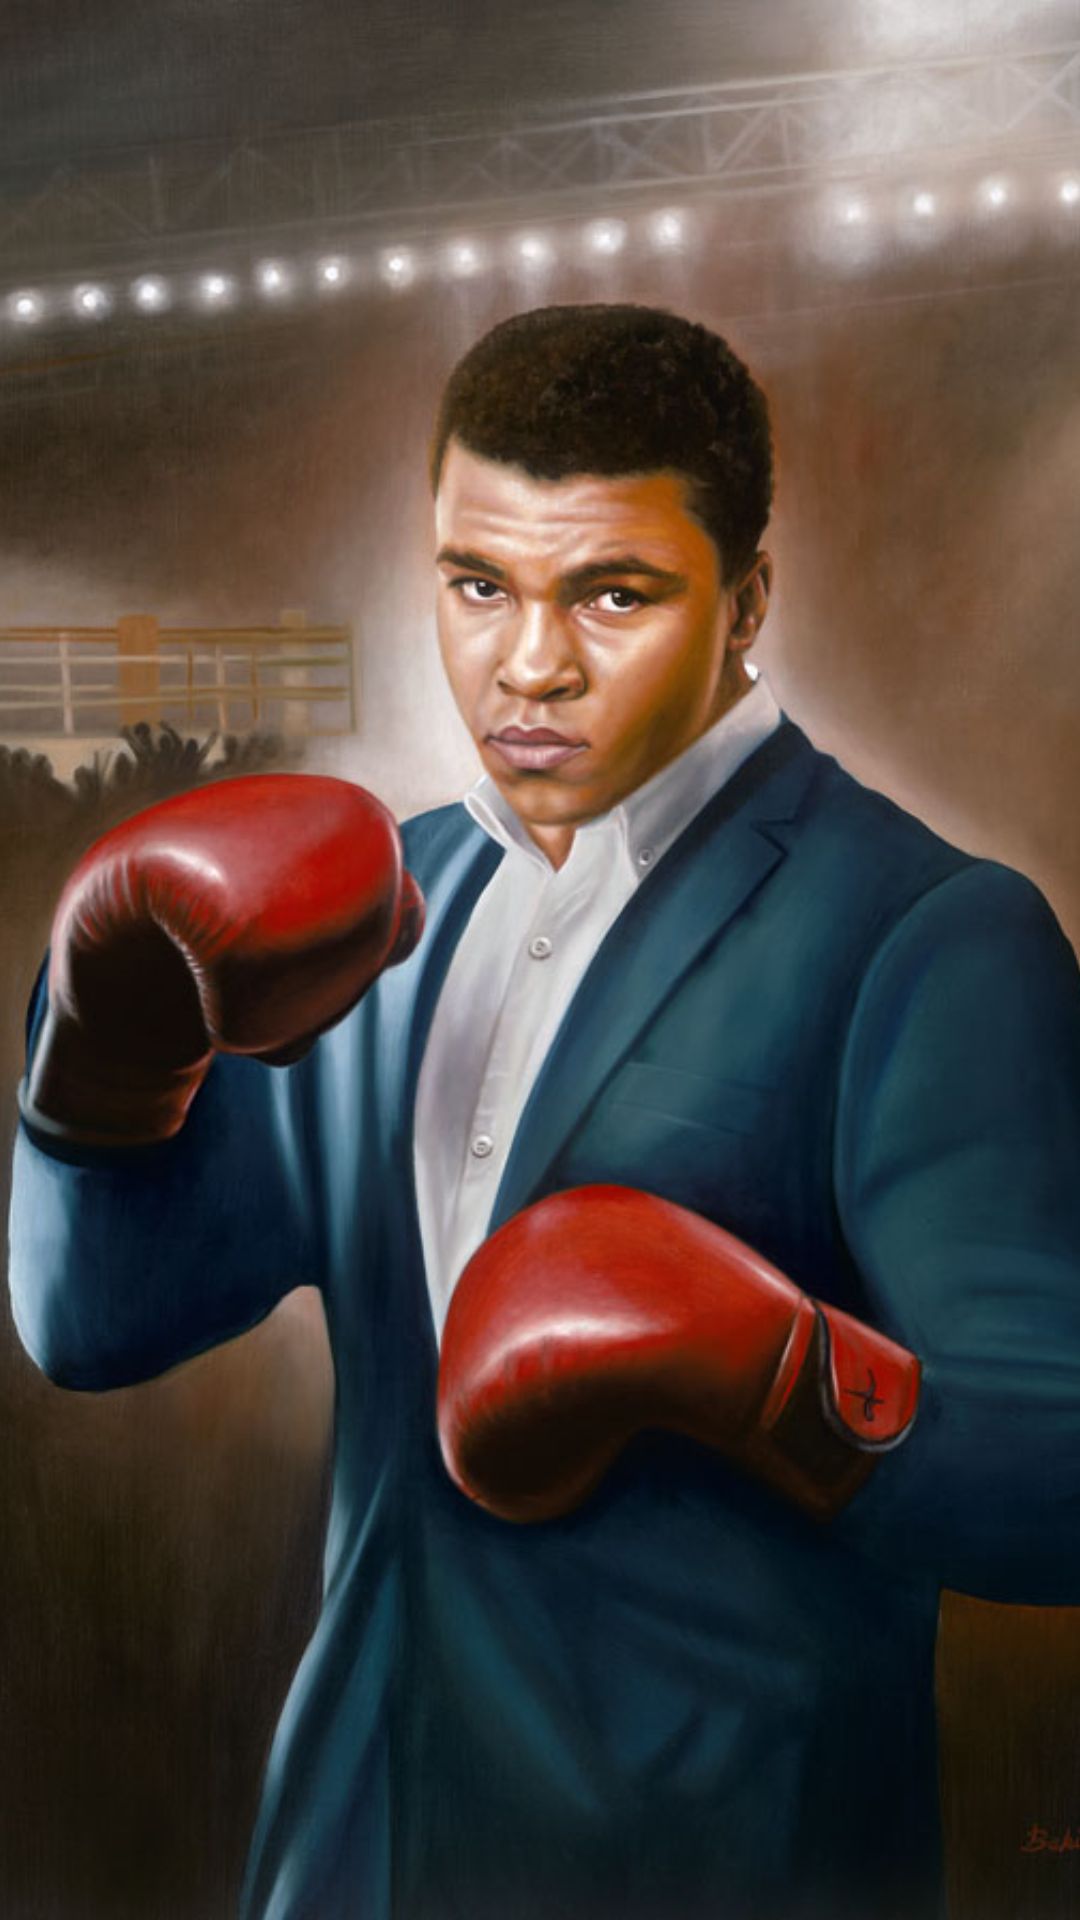 Muhammad Ali Wallpaper- Top Best Quality Muhammad Ali Wallpaper Background (HD, 4k)